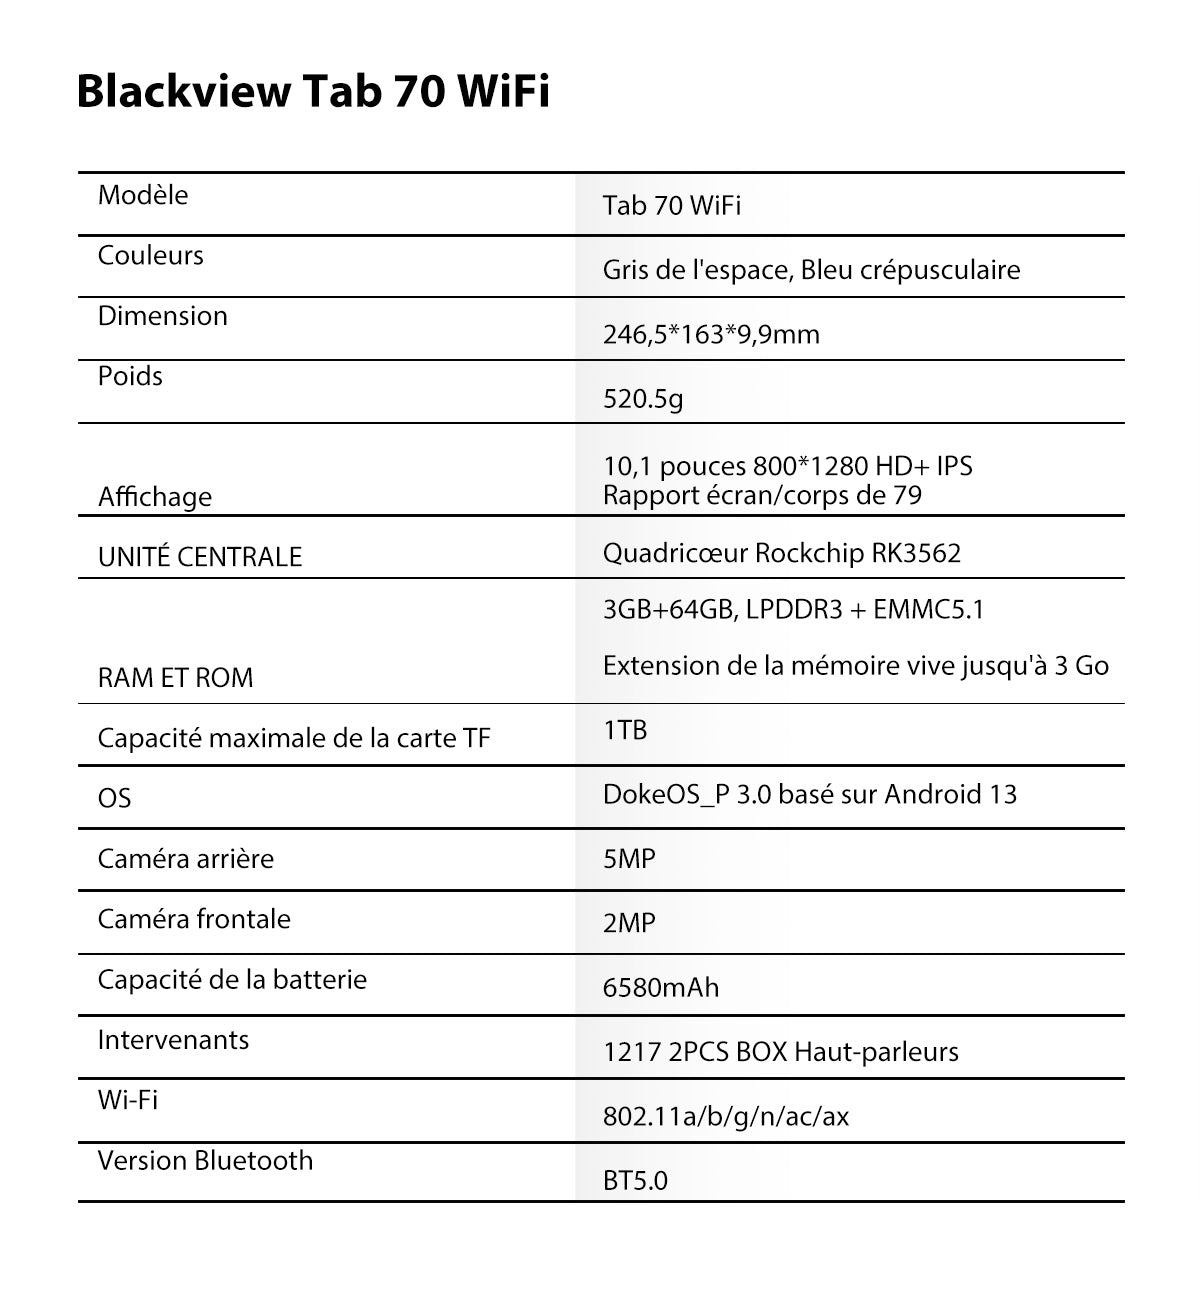 Blackview Tab 70 WIFI french description